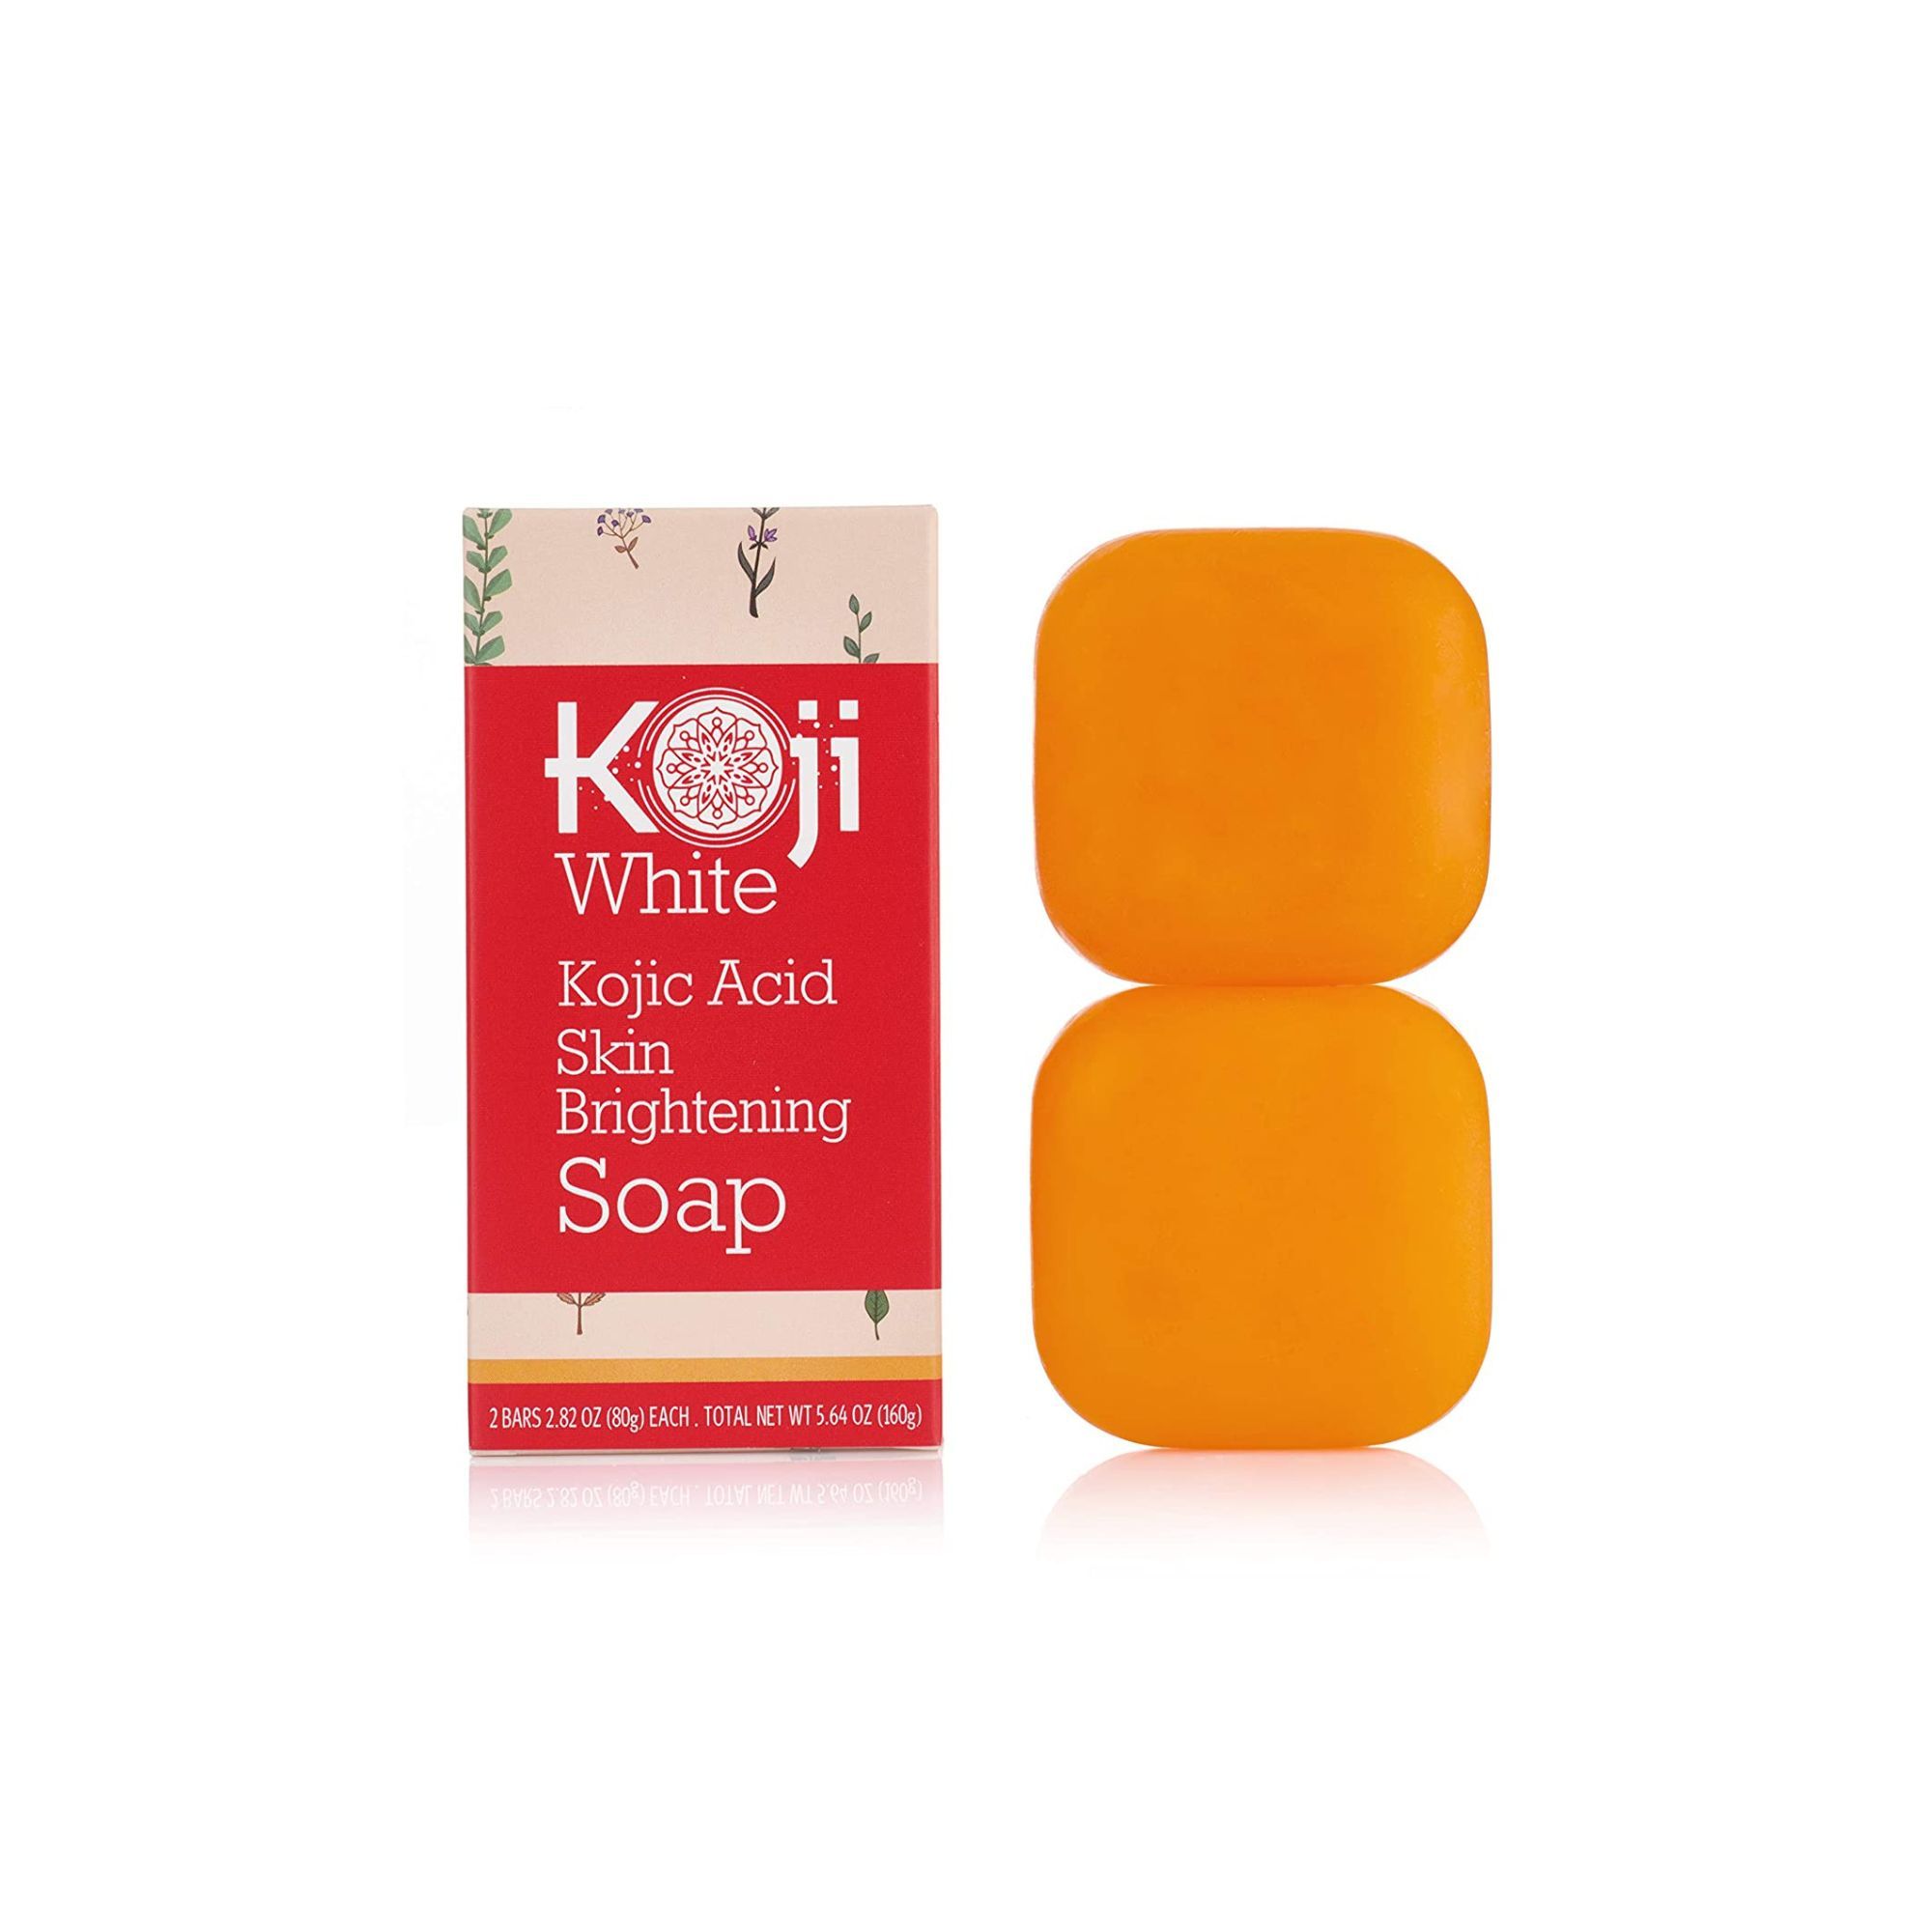 Kojic Acid Skin Brightening Soap for Dark Spot and Hyperpigmentation